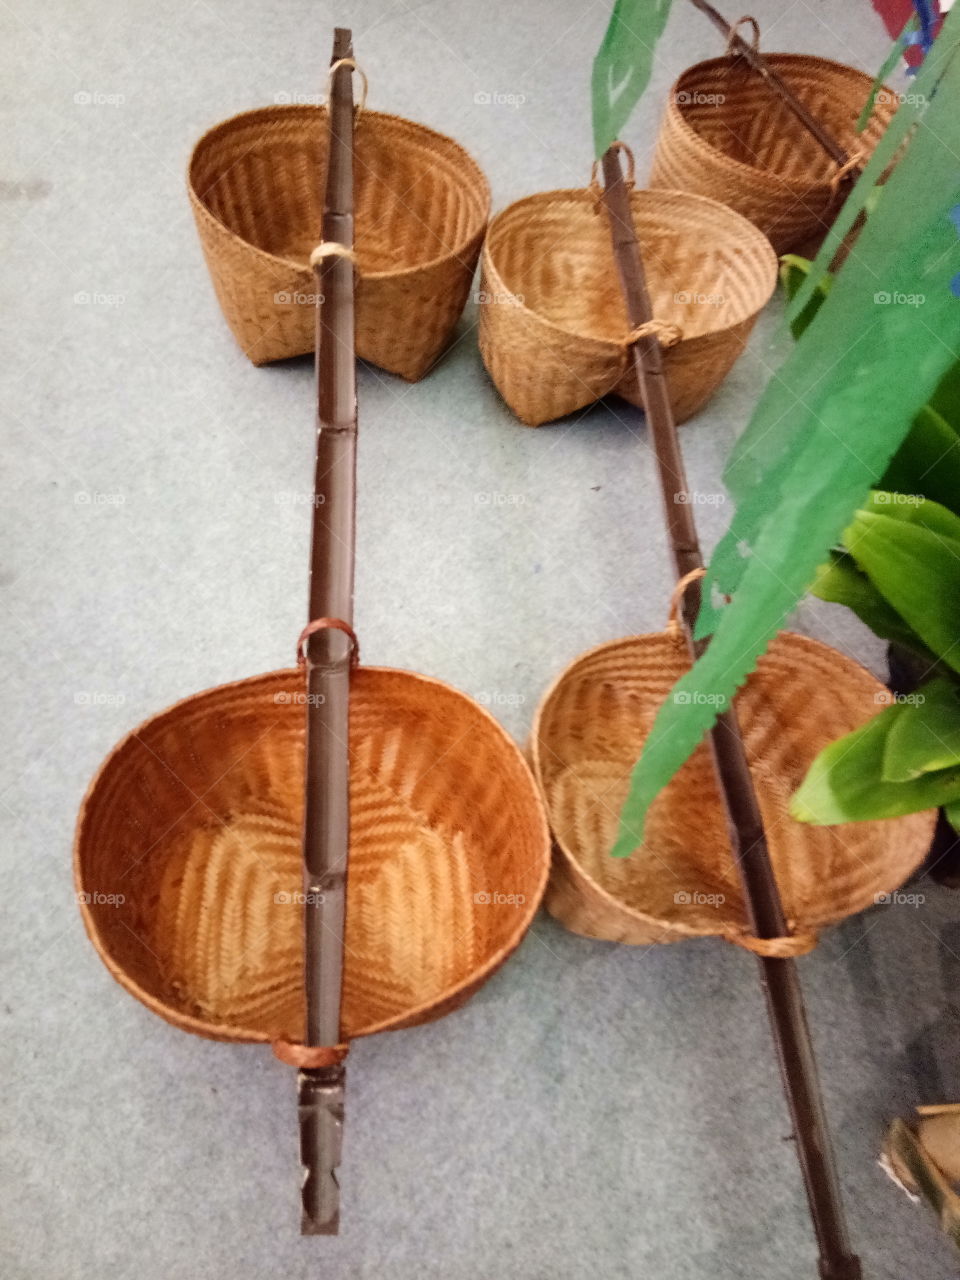 basket
wood
bamboo